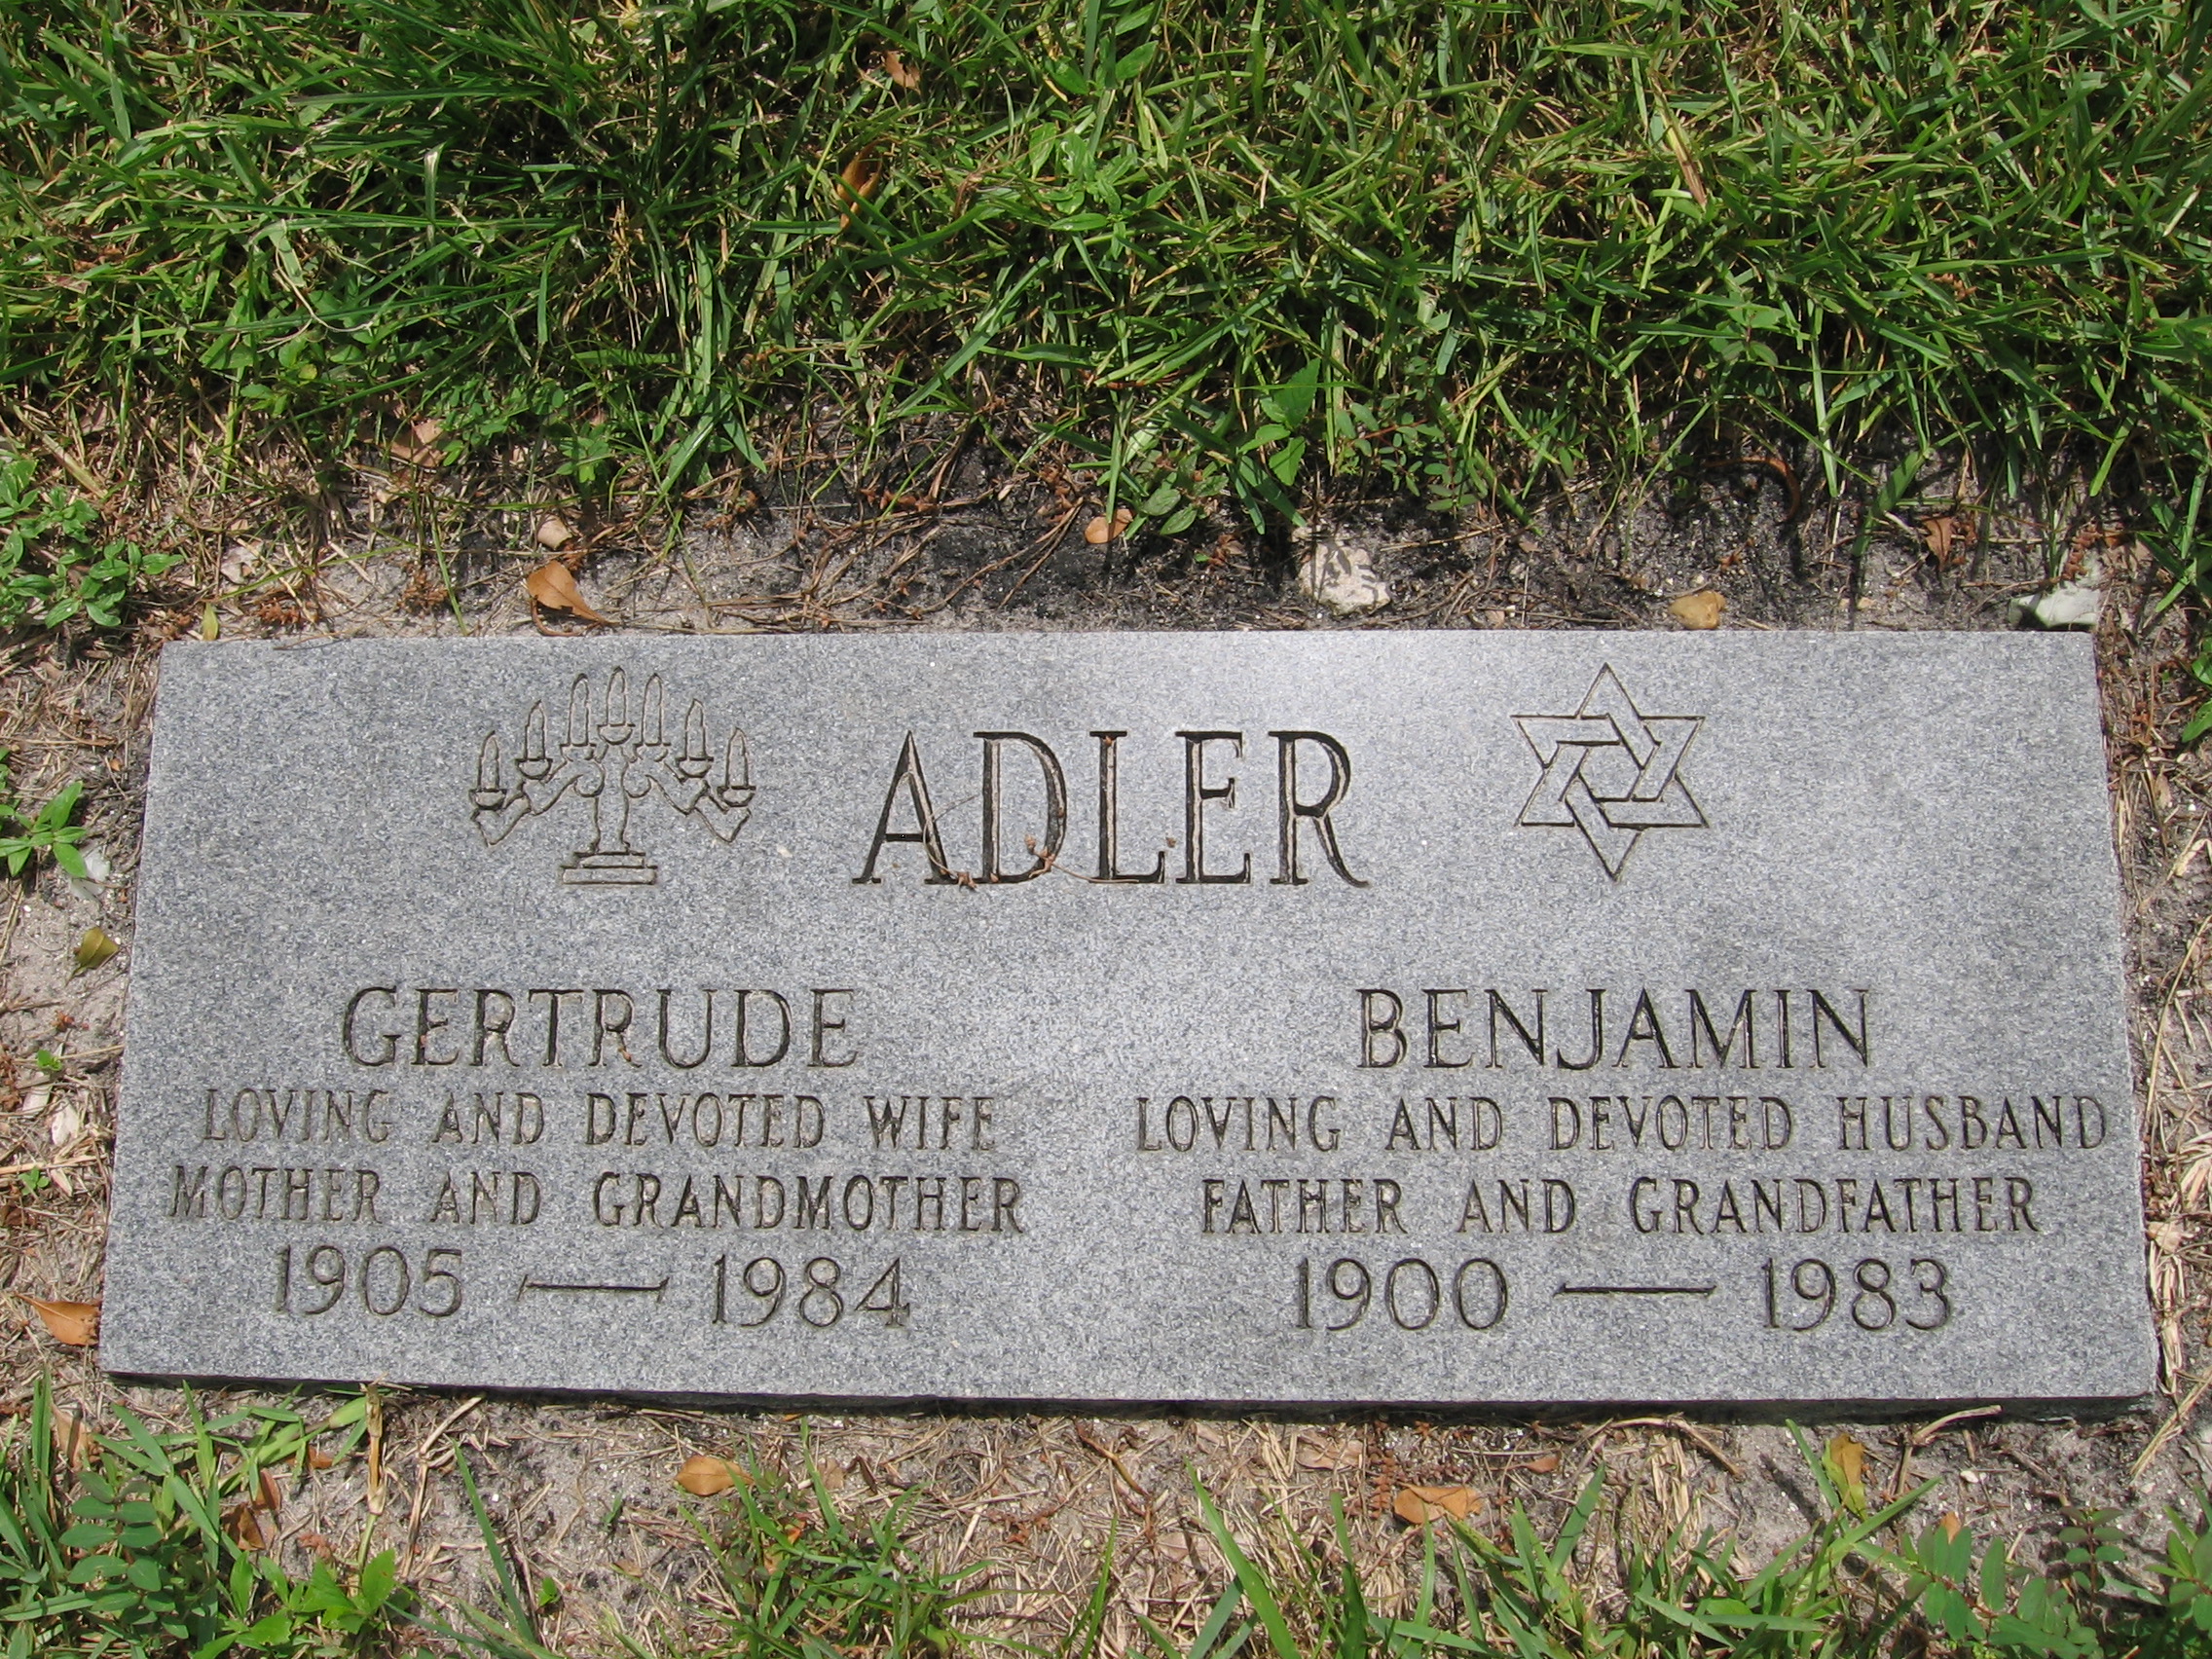 Gertrude Adler